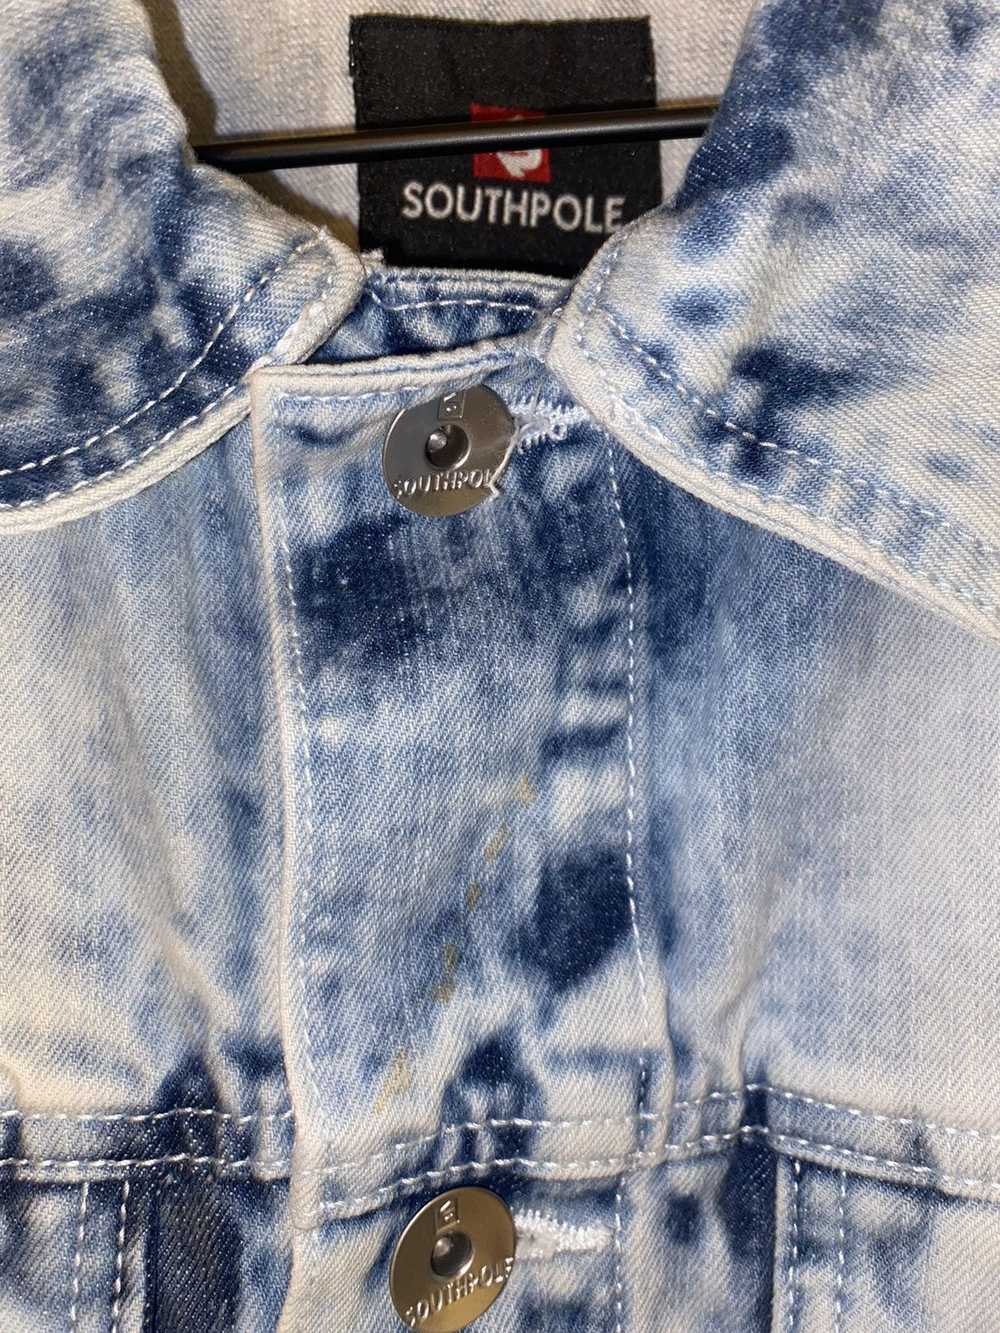 Southpole SouthPole denim jacket - image 7